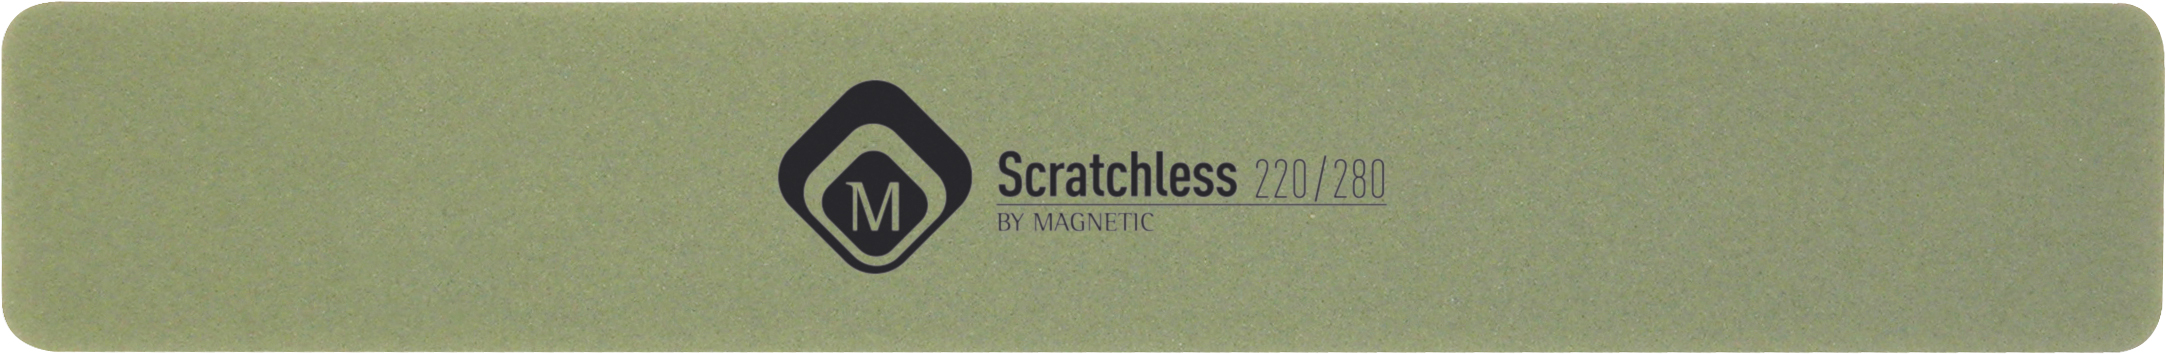 Scratchless Board 220/280 10 pcs